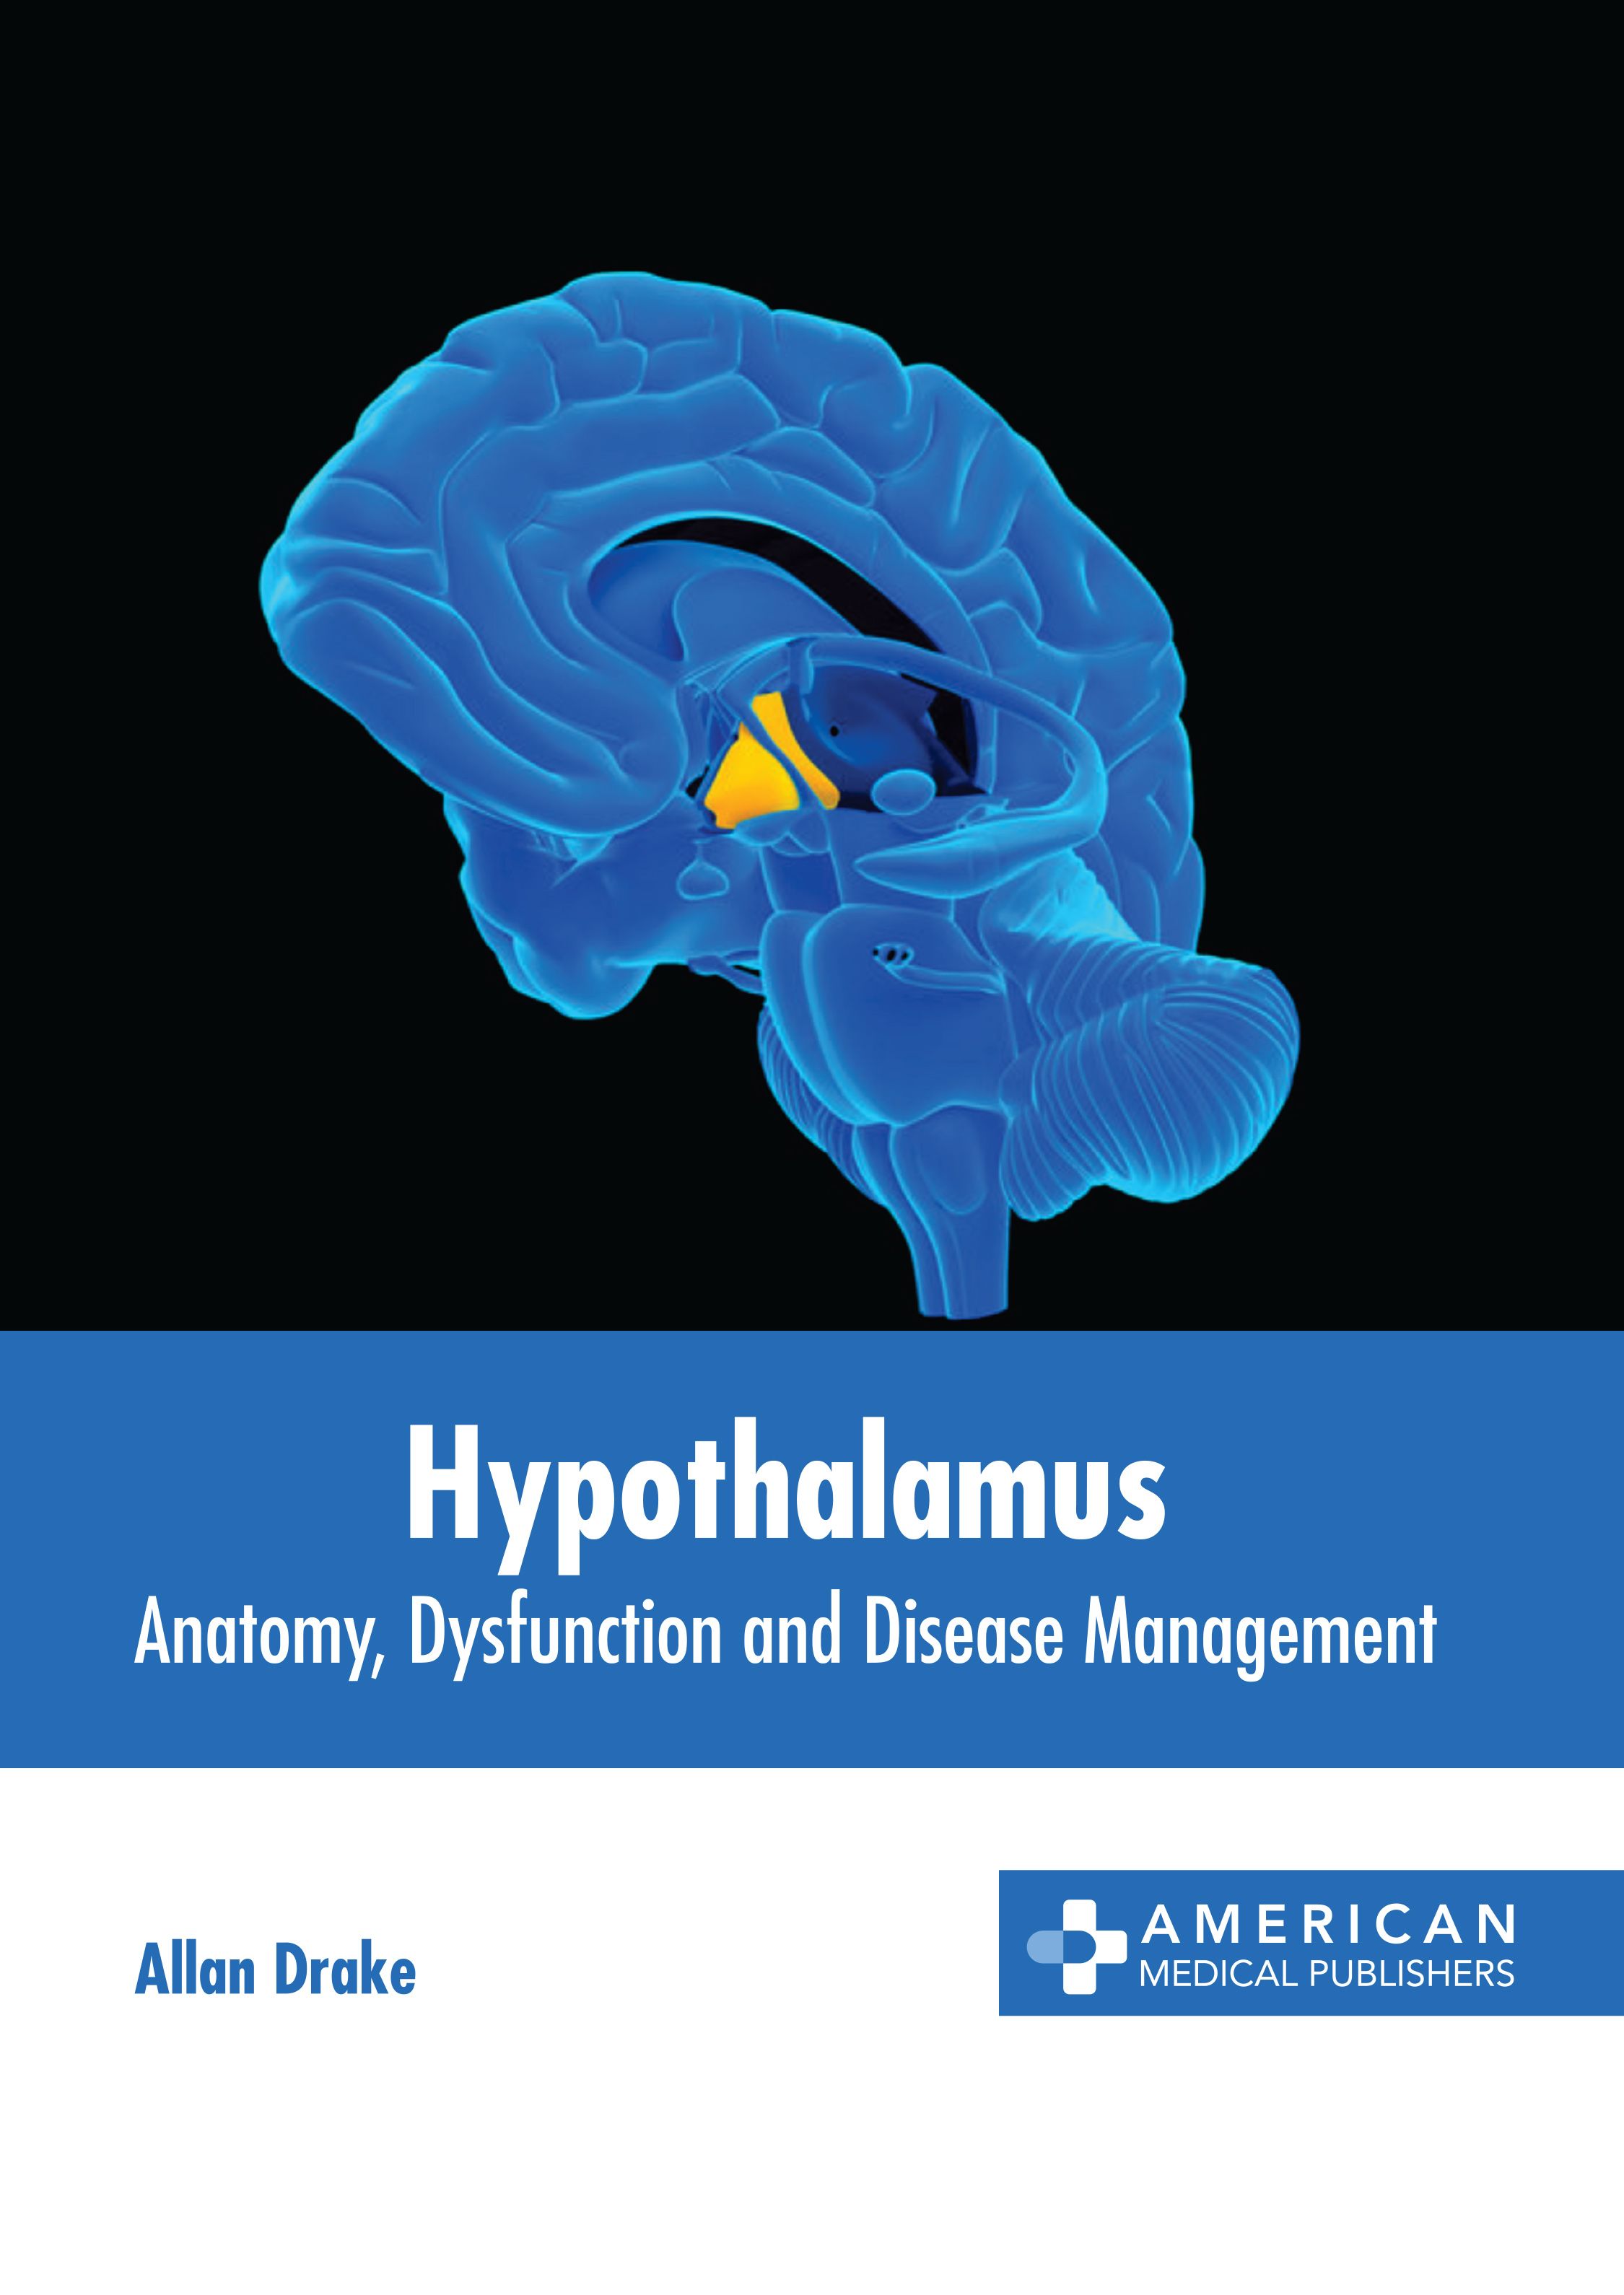 HYPOTHALAMUS: ANATOMY, DYSFUNCTION AND DISEASE MANAGEMENT